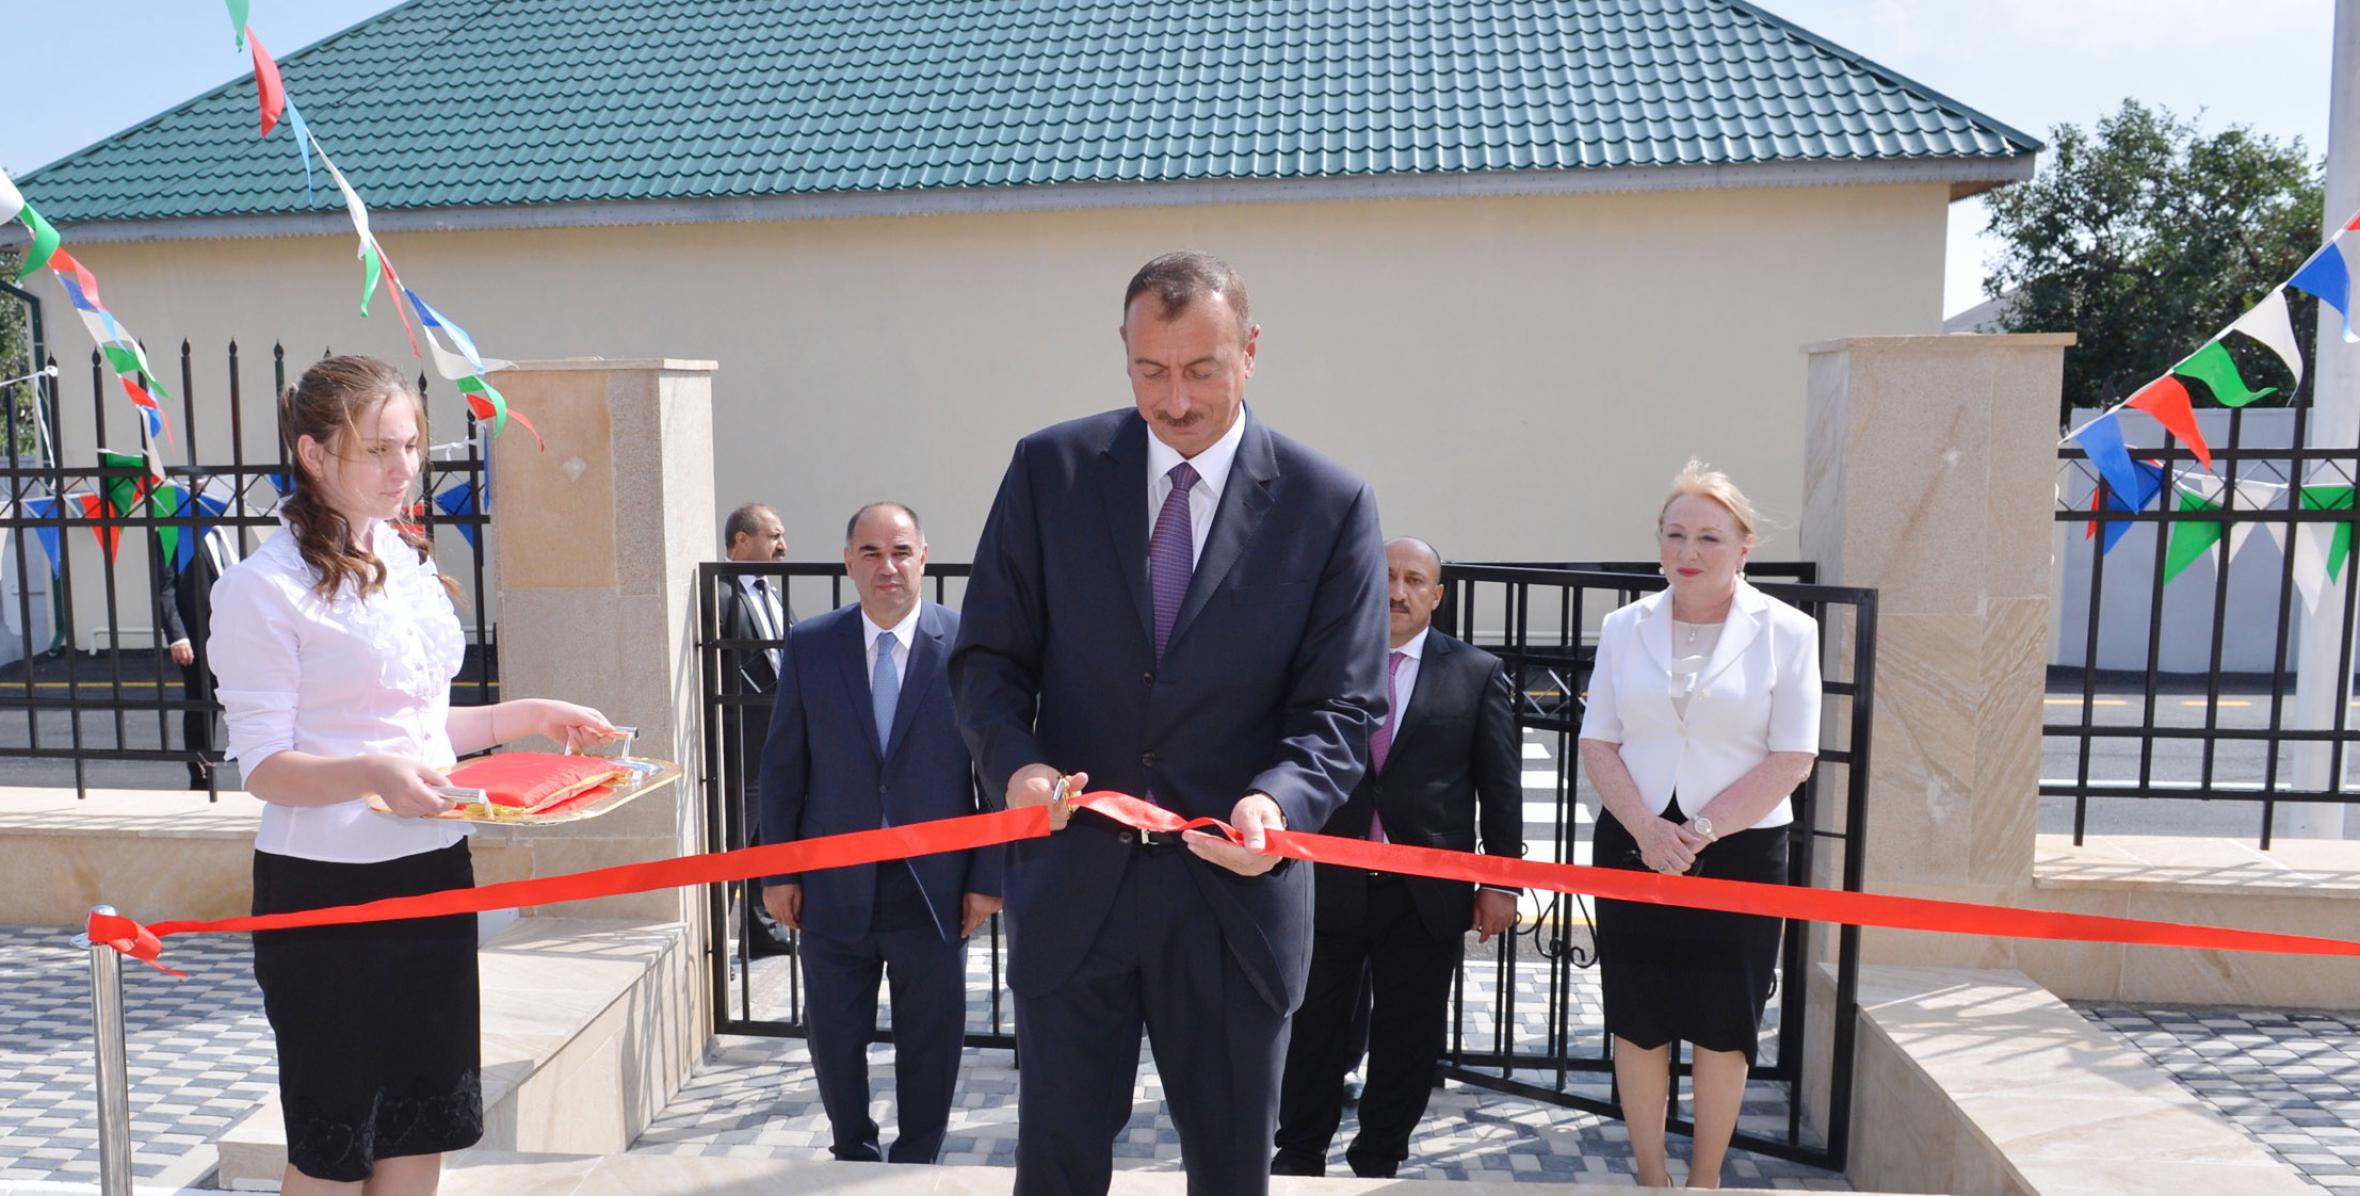 Ilham Aliyev attended the opening of nursery school No. 2 in Oguz